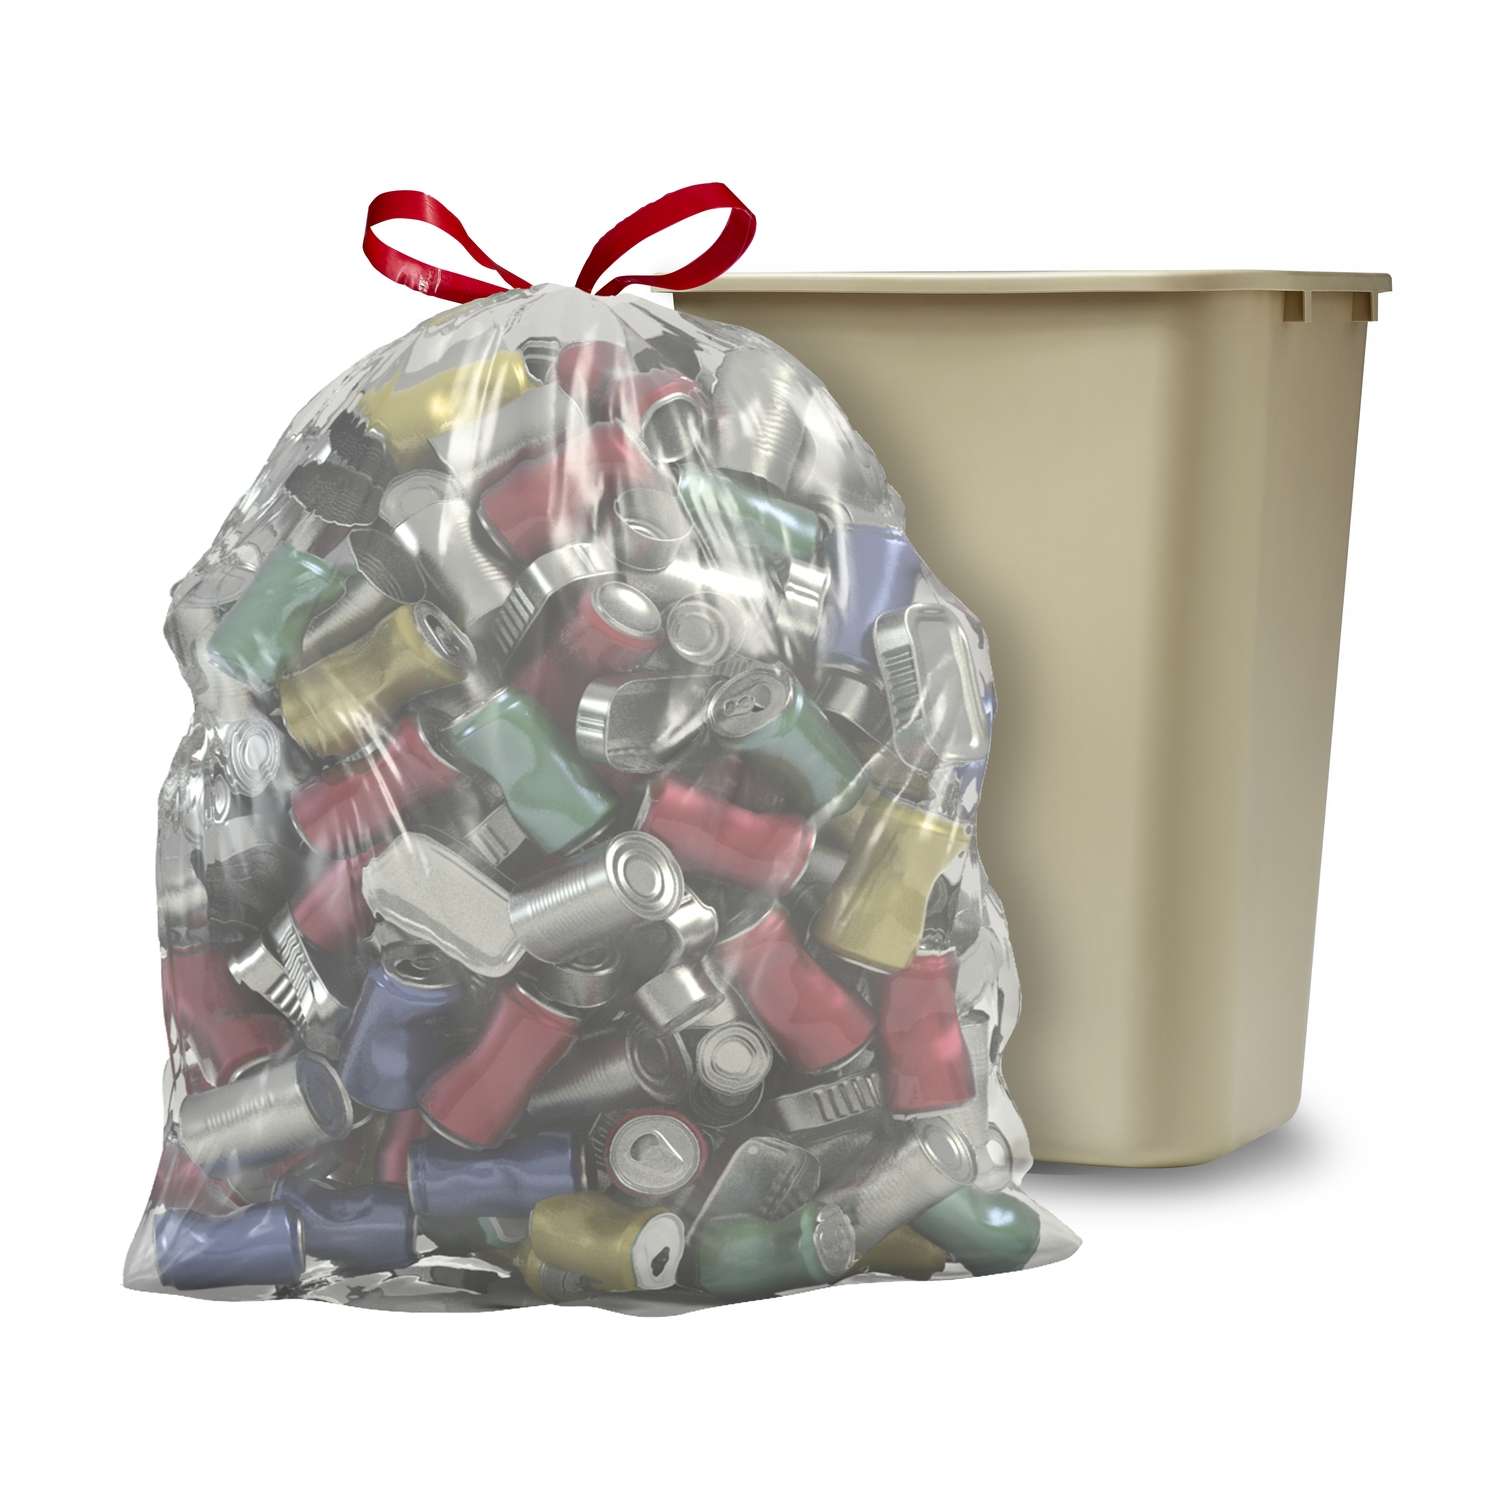 Glad Drawstring Clear Recycling Tall Kitchen Trash Bags, 13 Gallon